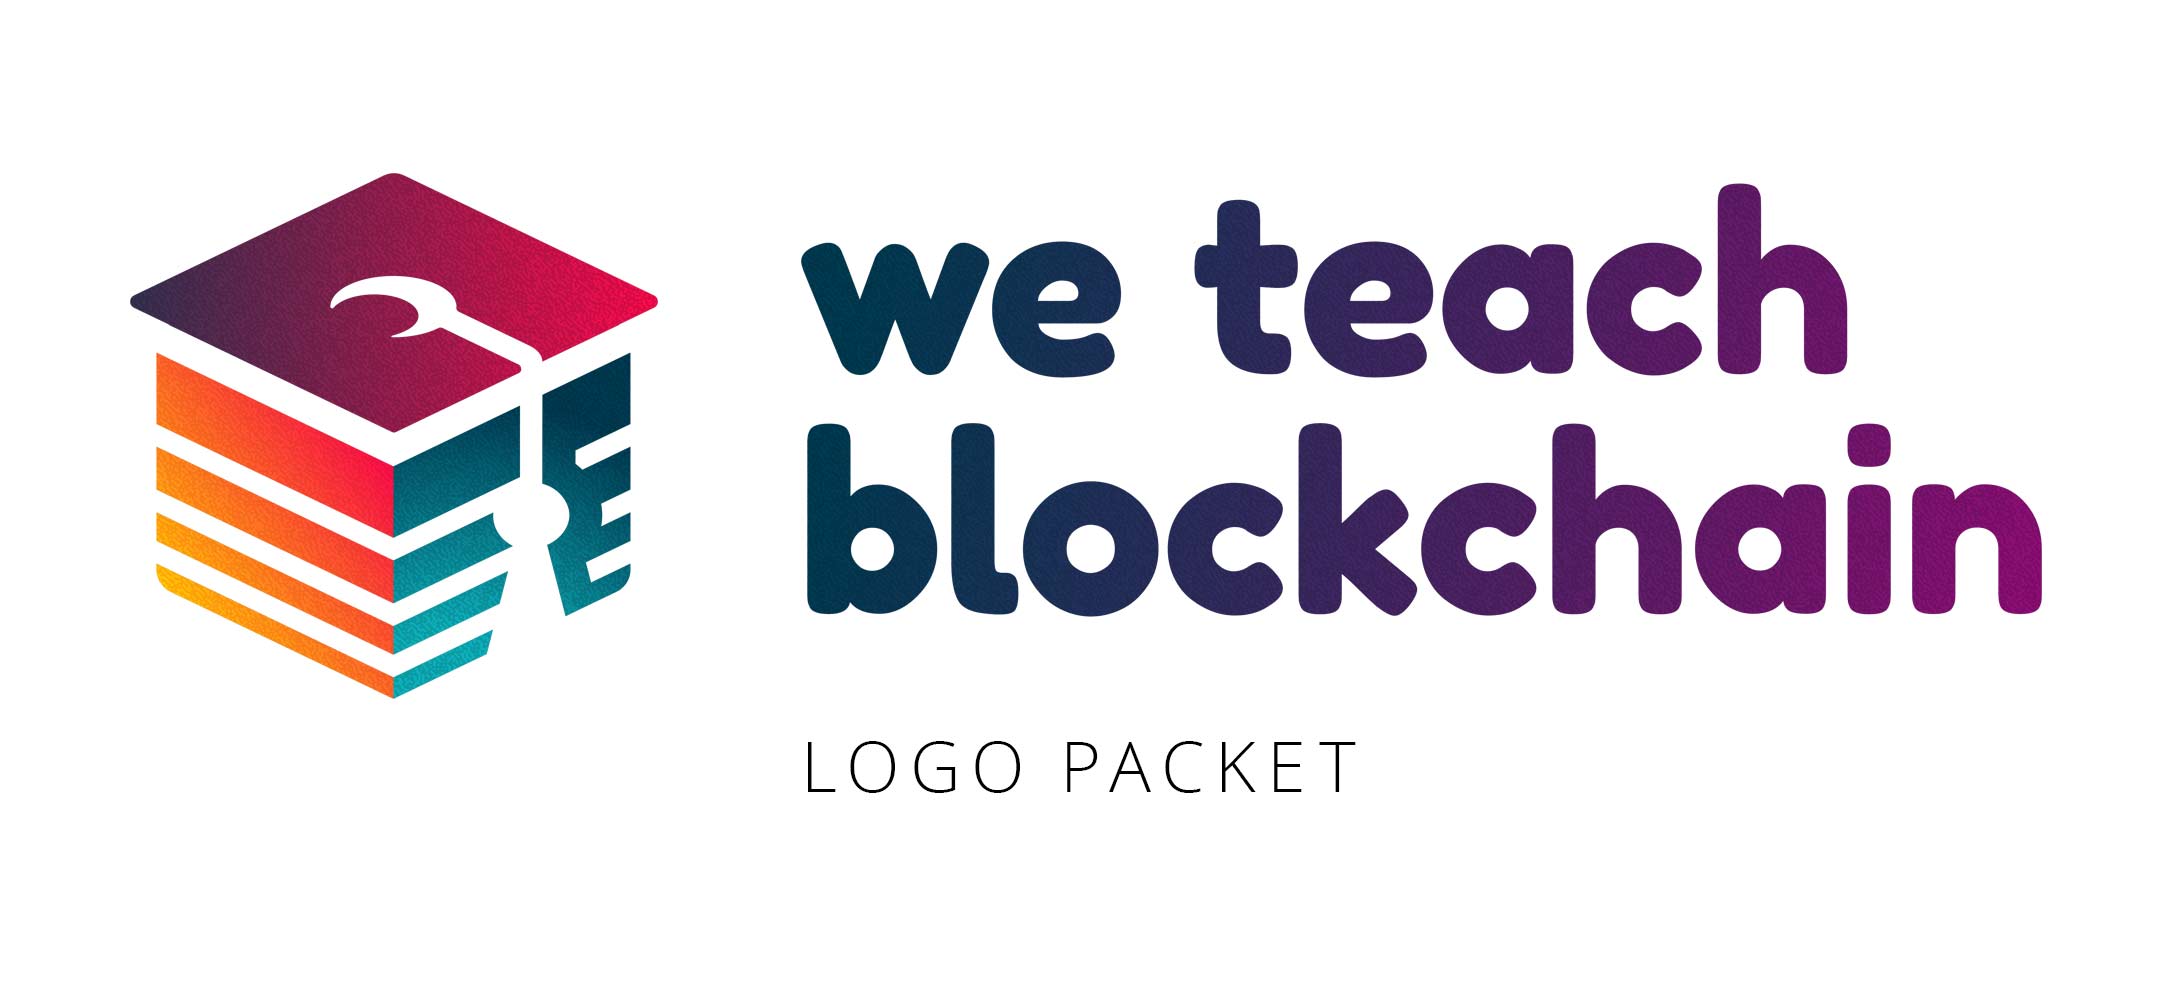 We Teach Blockchain logos